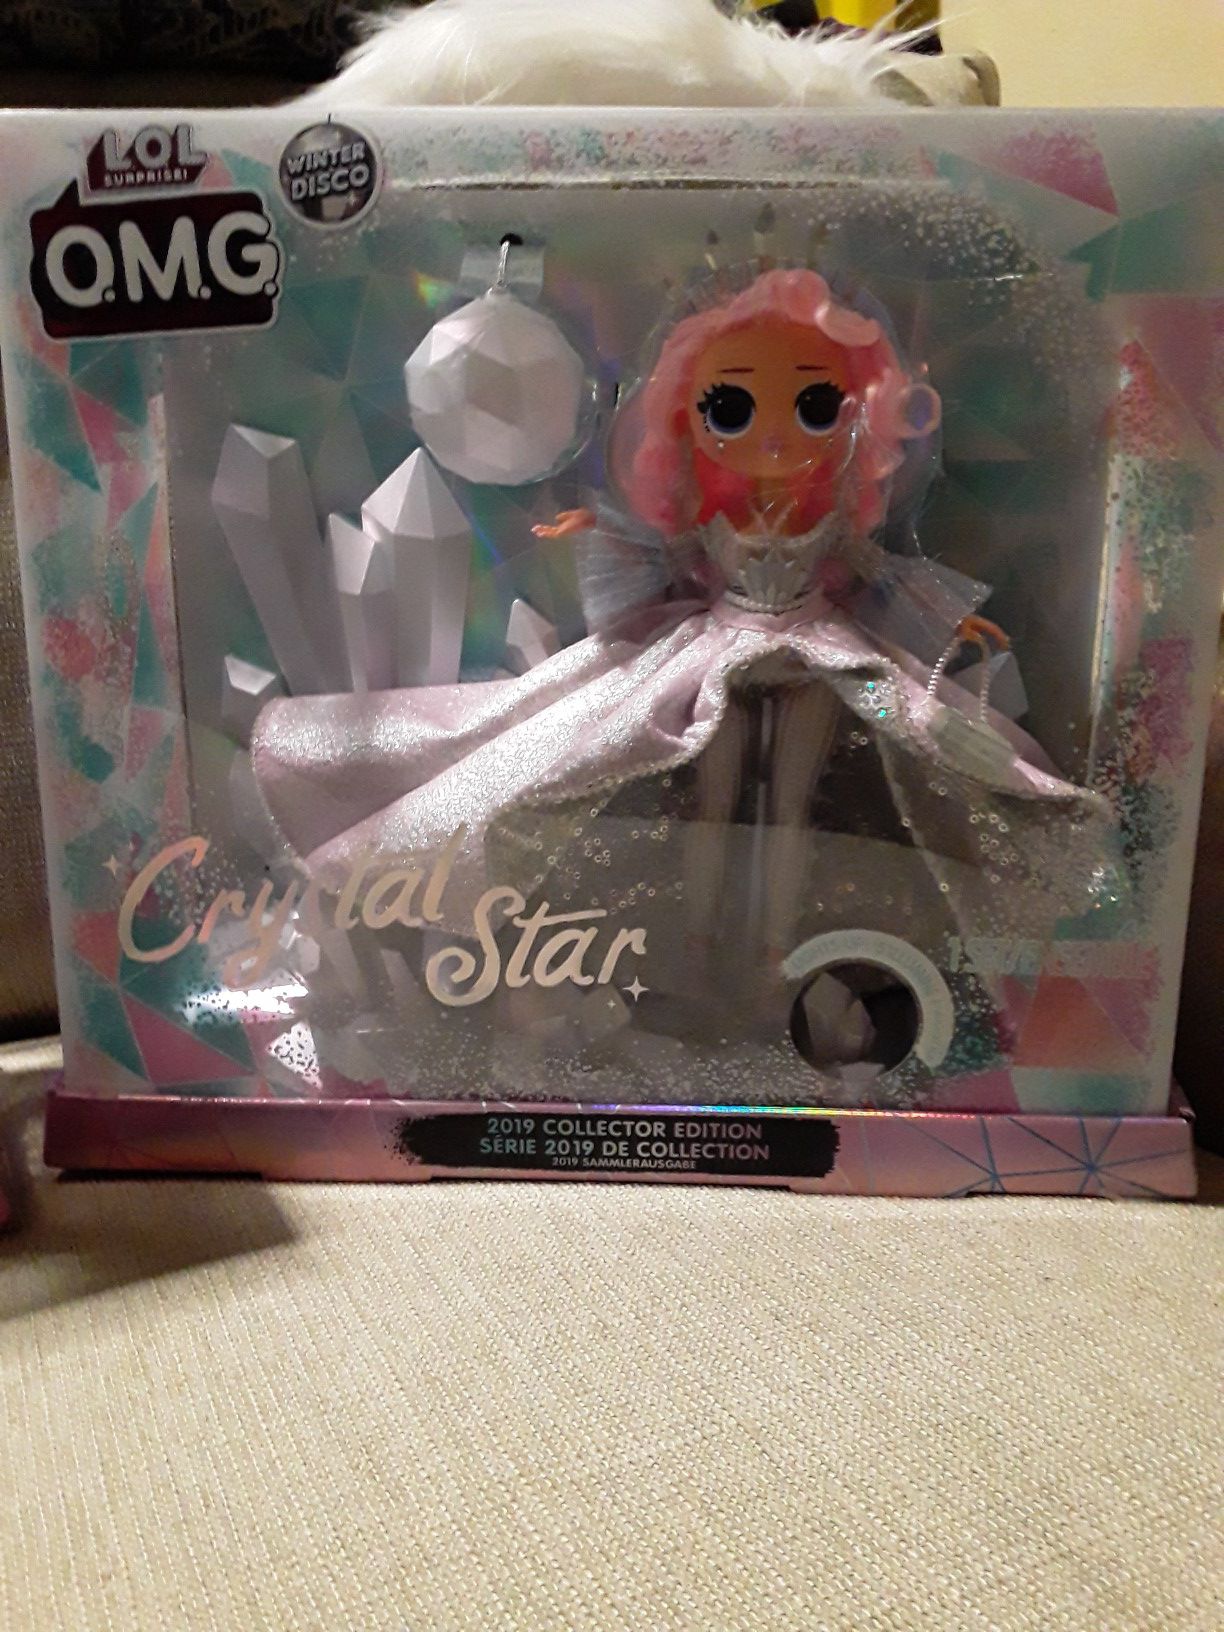 Lol Surprise Omg Doll Crystal Star